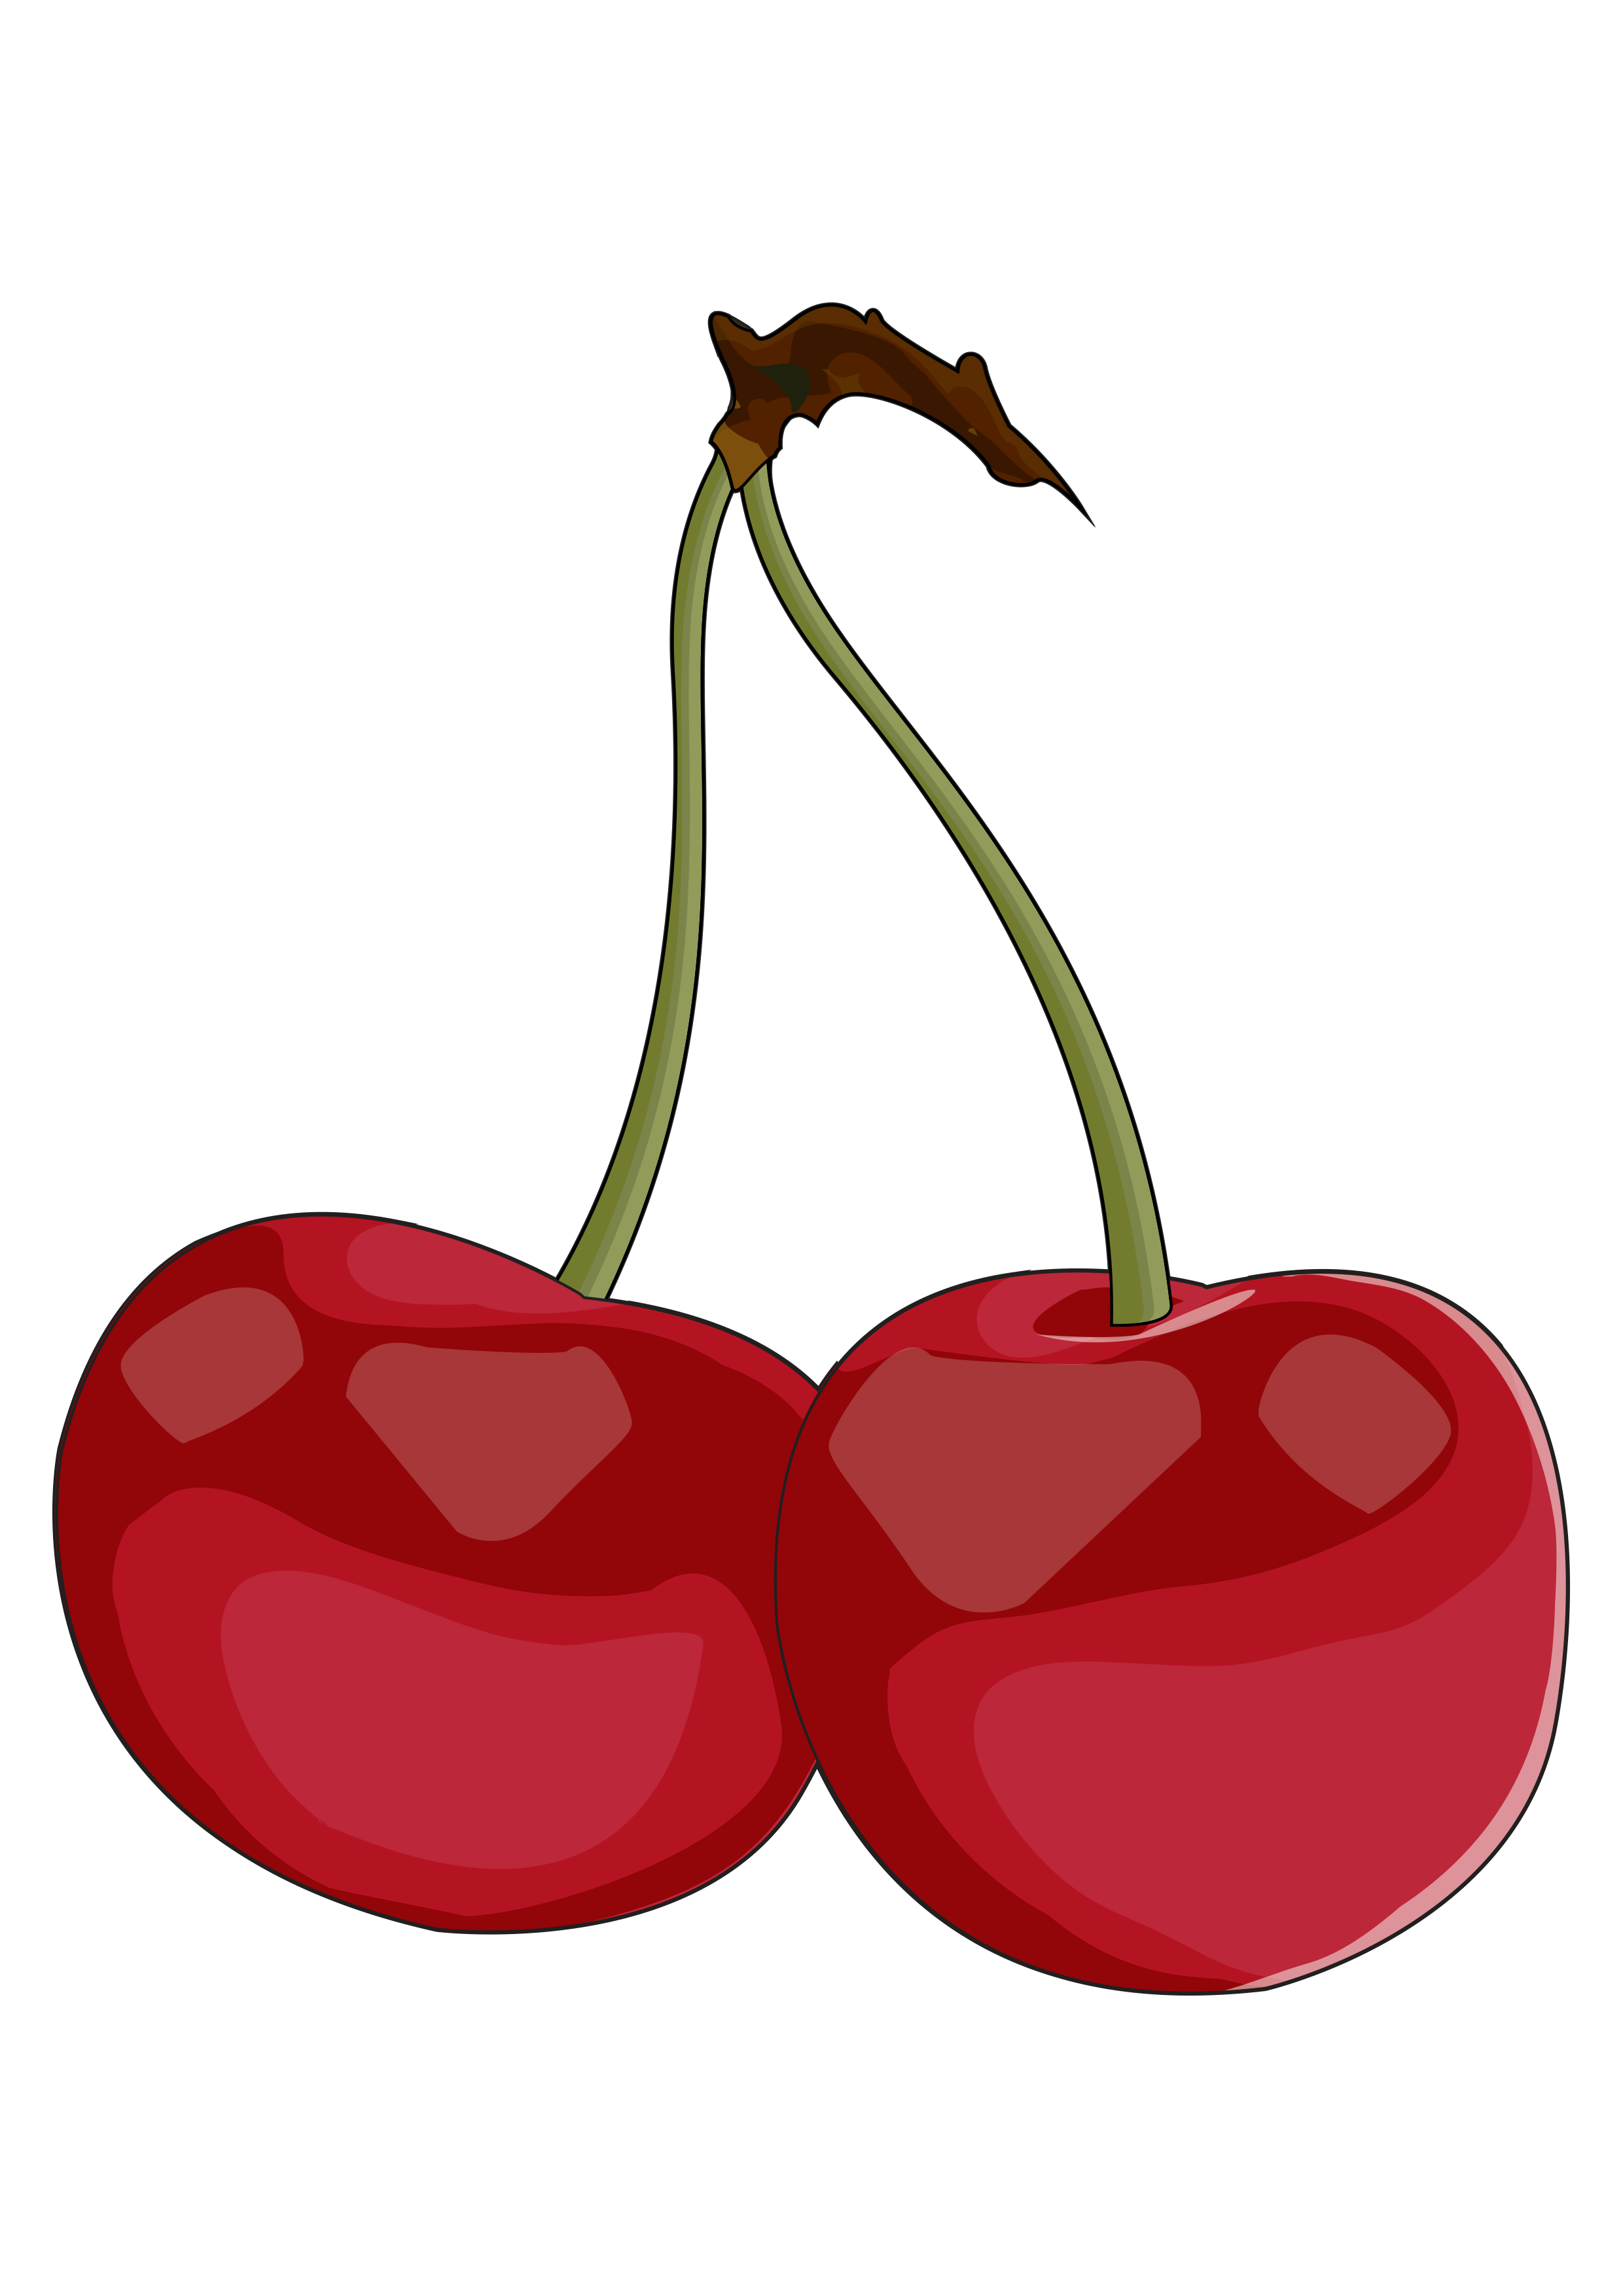 cherries clipart cereza